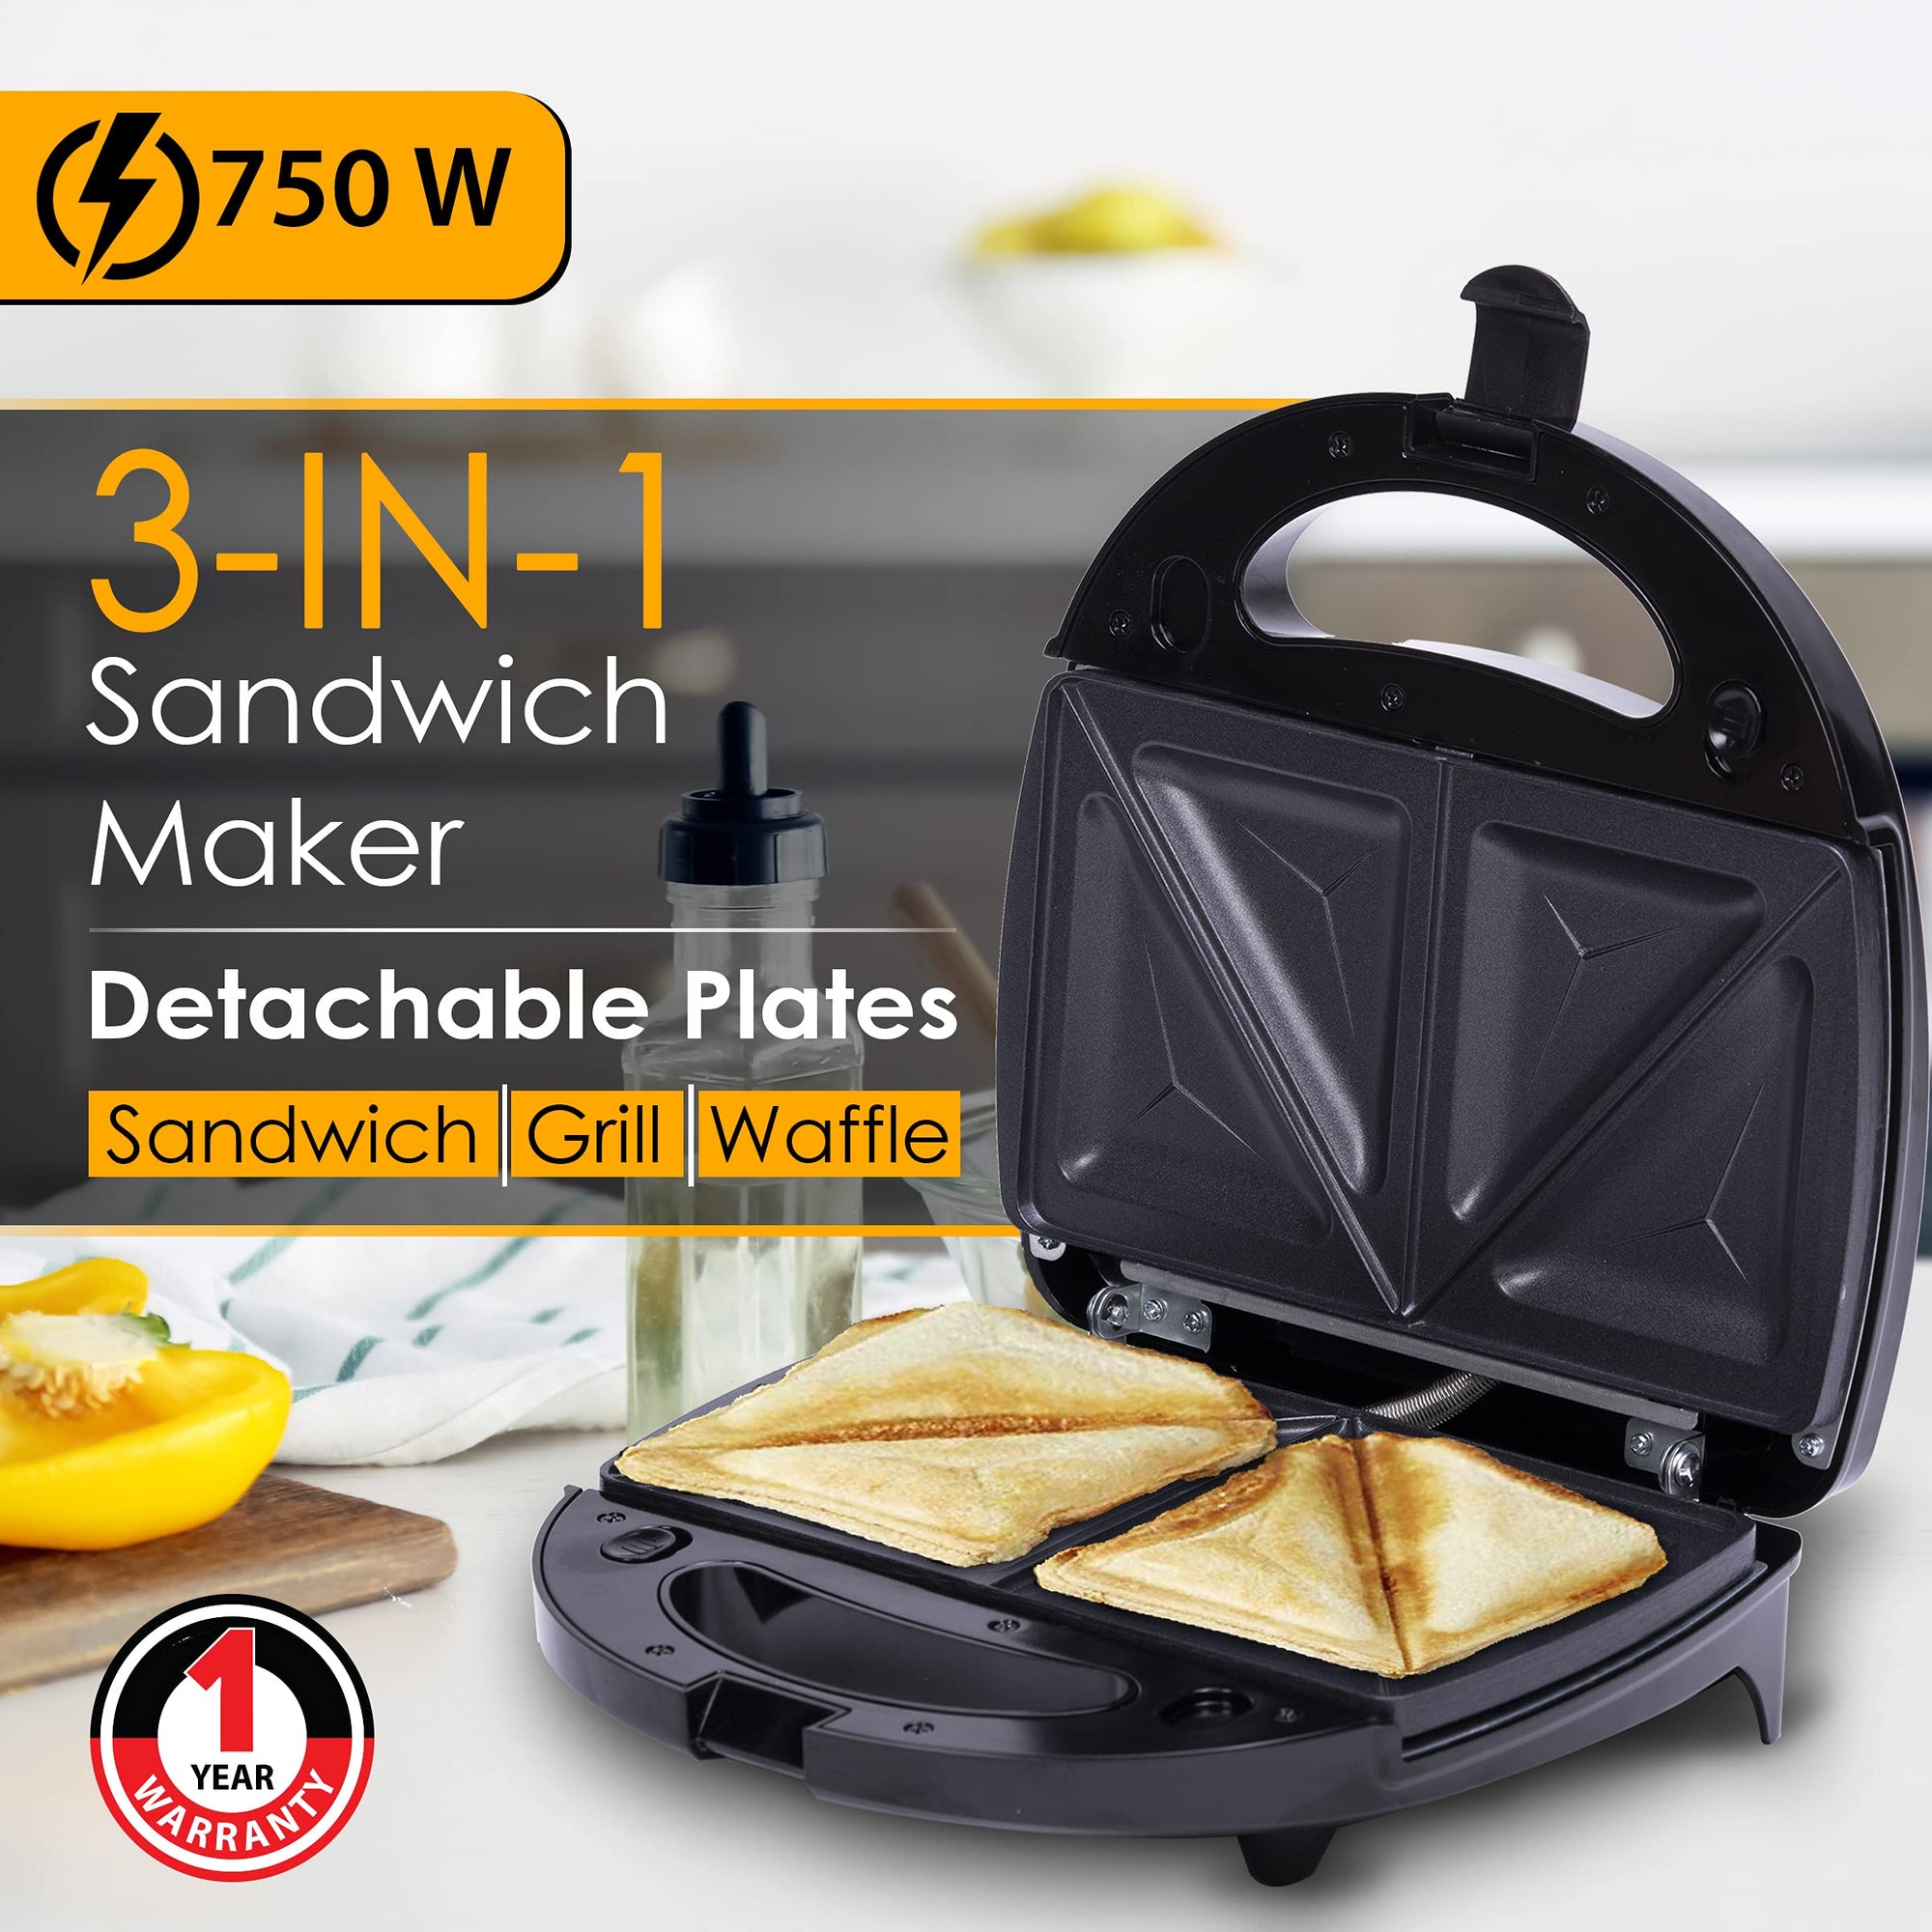 AGARO Regal 750 Watts 3-In-1 Sandwich Maker, Easy Detachable Non-Stick Plates For Sandwich, Grill & Waffle, 2 Slice, Steel